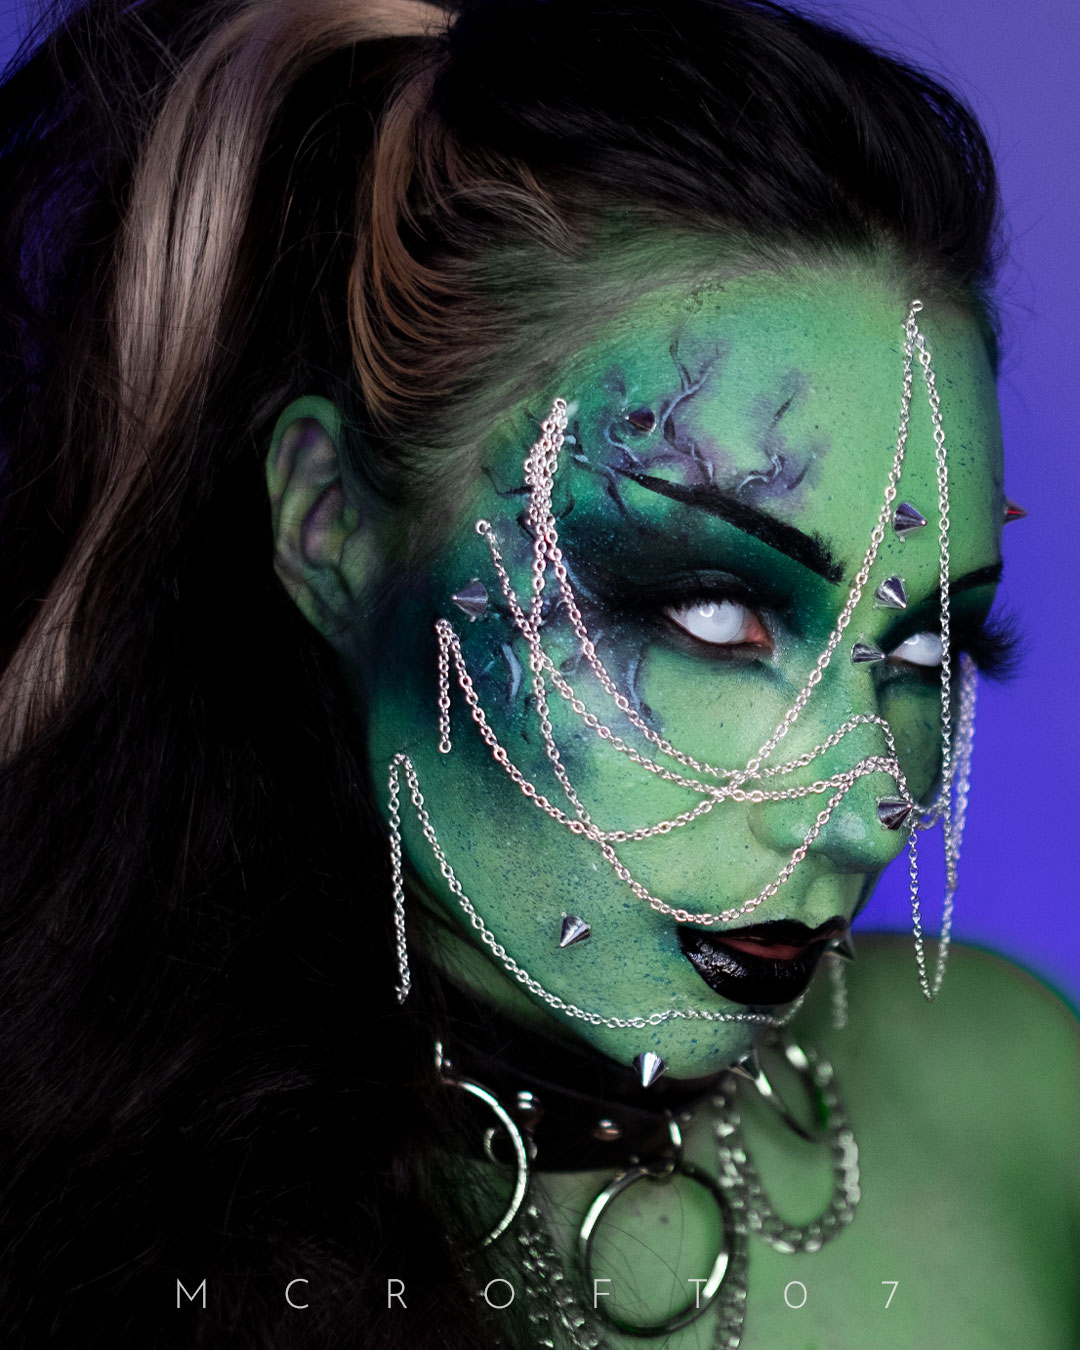 Frankenstein Makeup by mcroft07 on DeviantArt